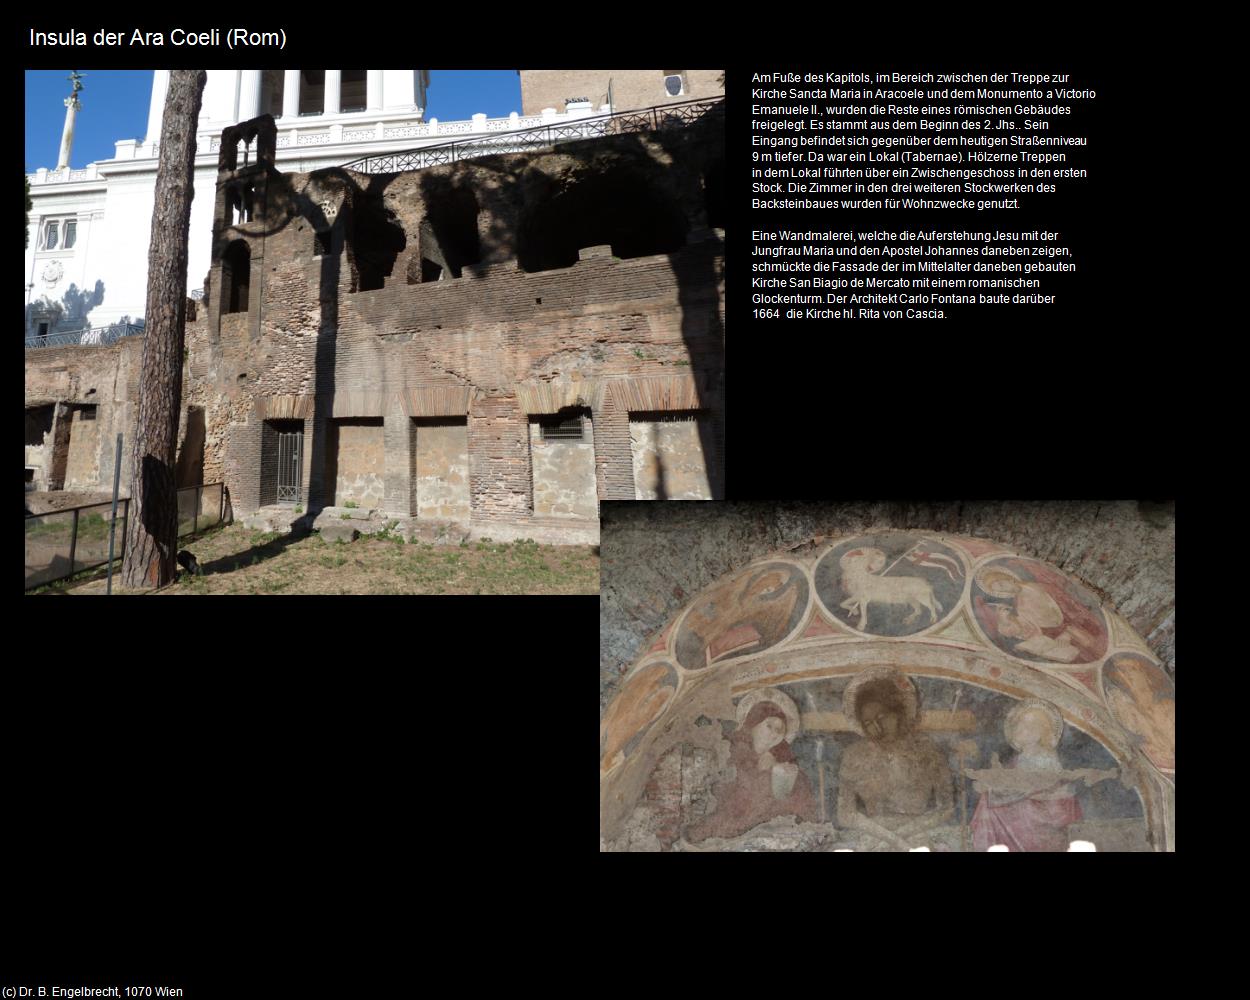 Insula der Ara Coeli  (Rom-04-Forum Romanum und Umgebung) in ROM